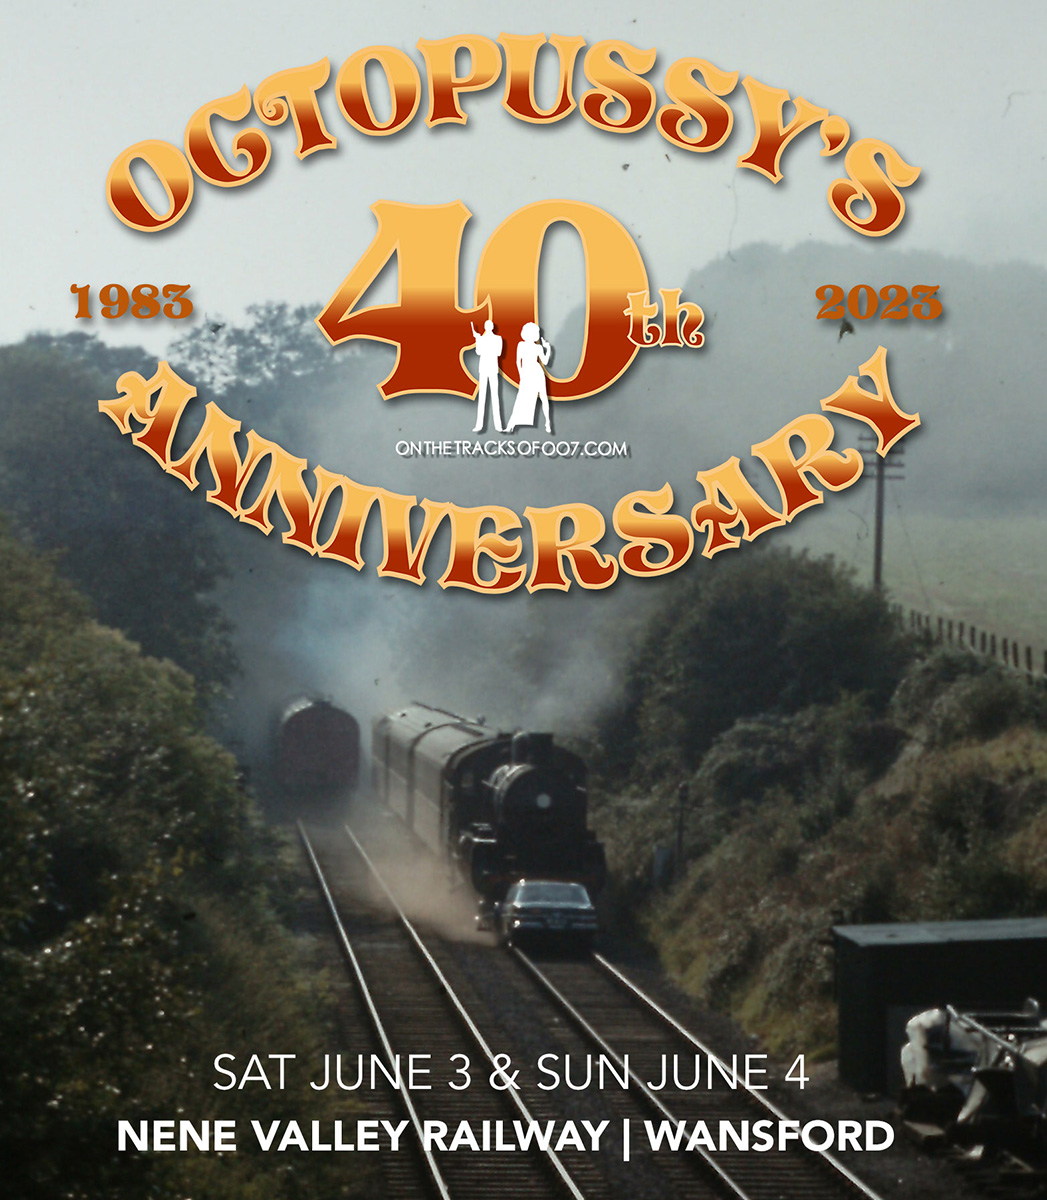 230316-octopussy-40th-anniversary-celebrations-flyer-3.jpg